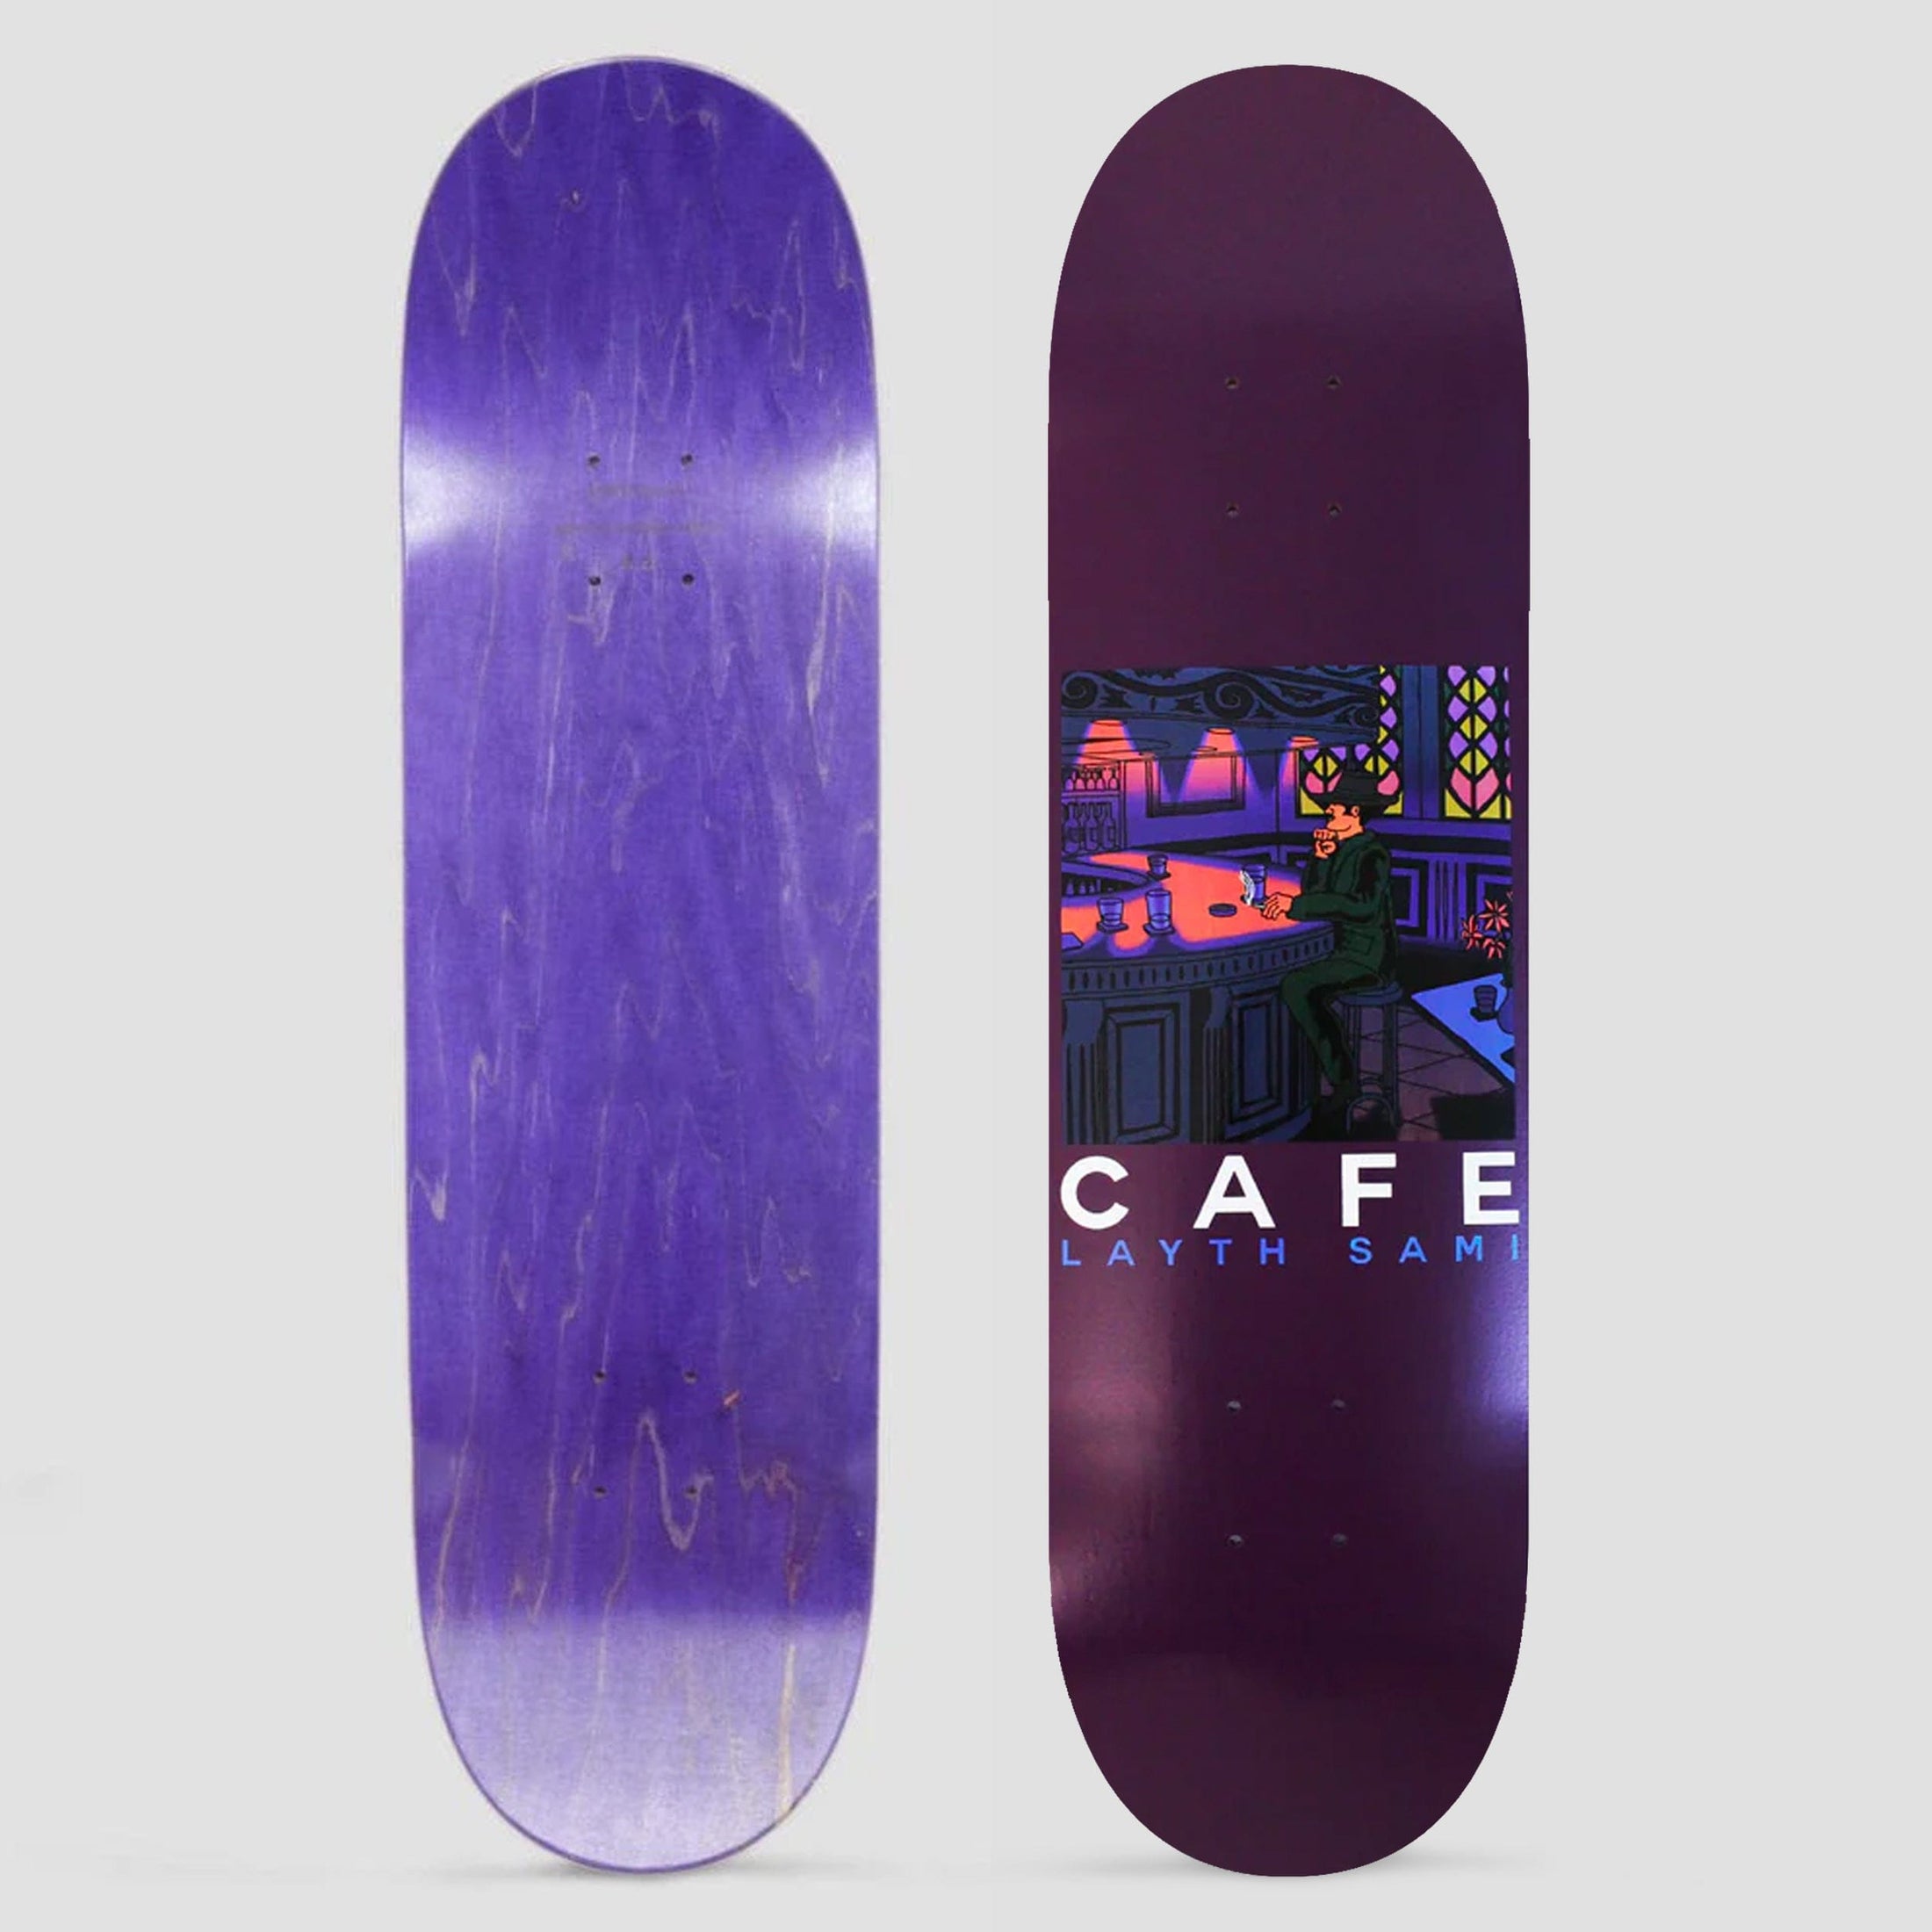 Skateboard Cafe 8.0 Layth Sami Barfly Skateboard Deck Purple